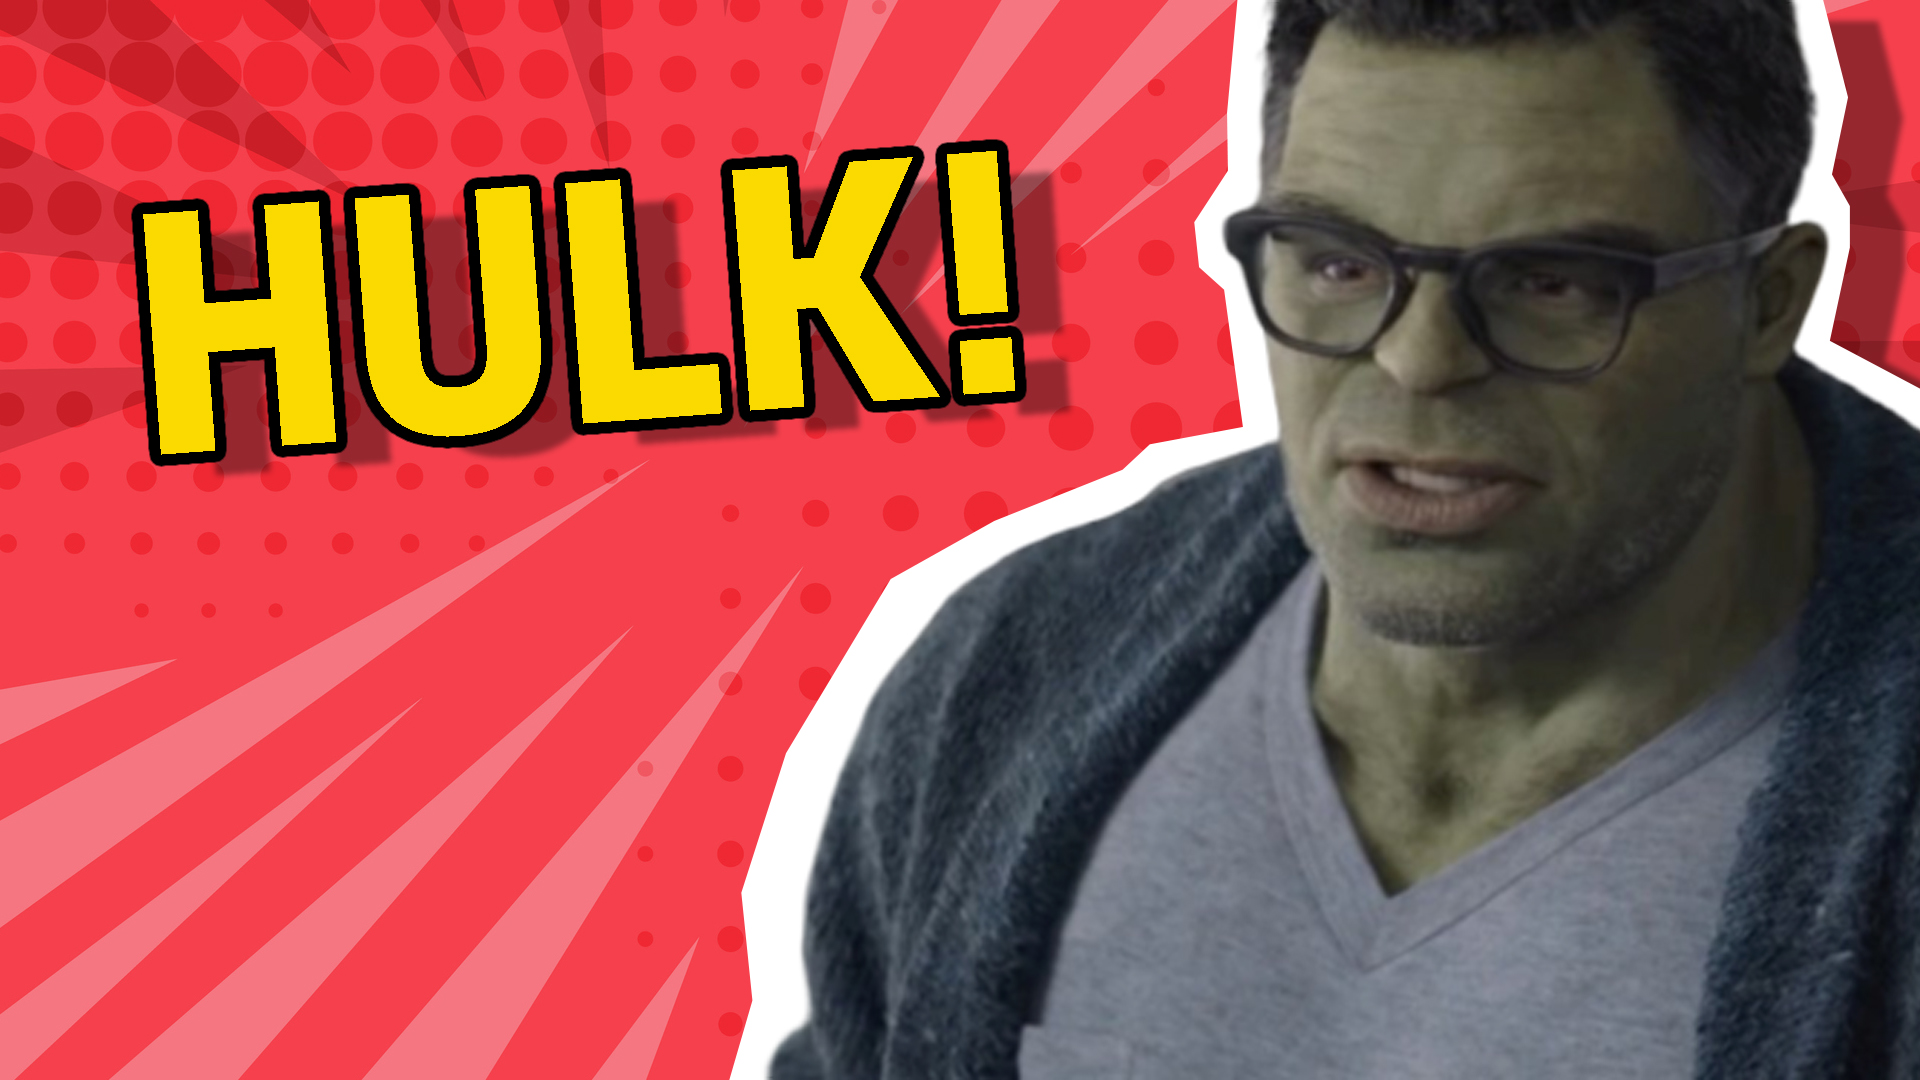 Hulk wearing a cardigan and glasses